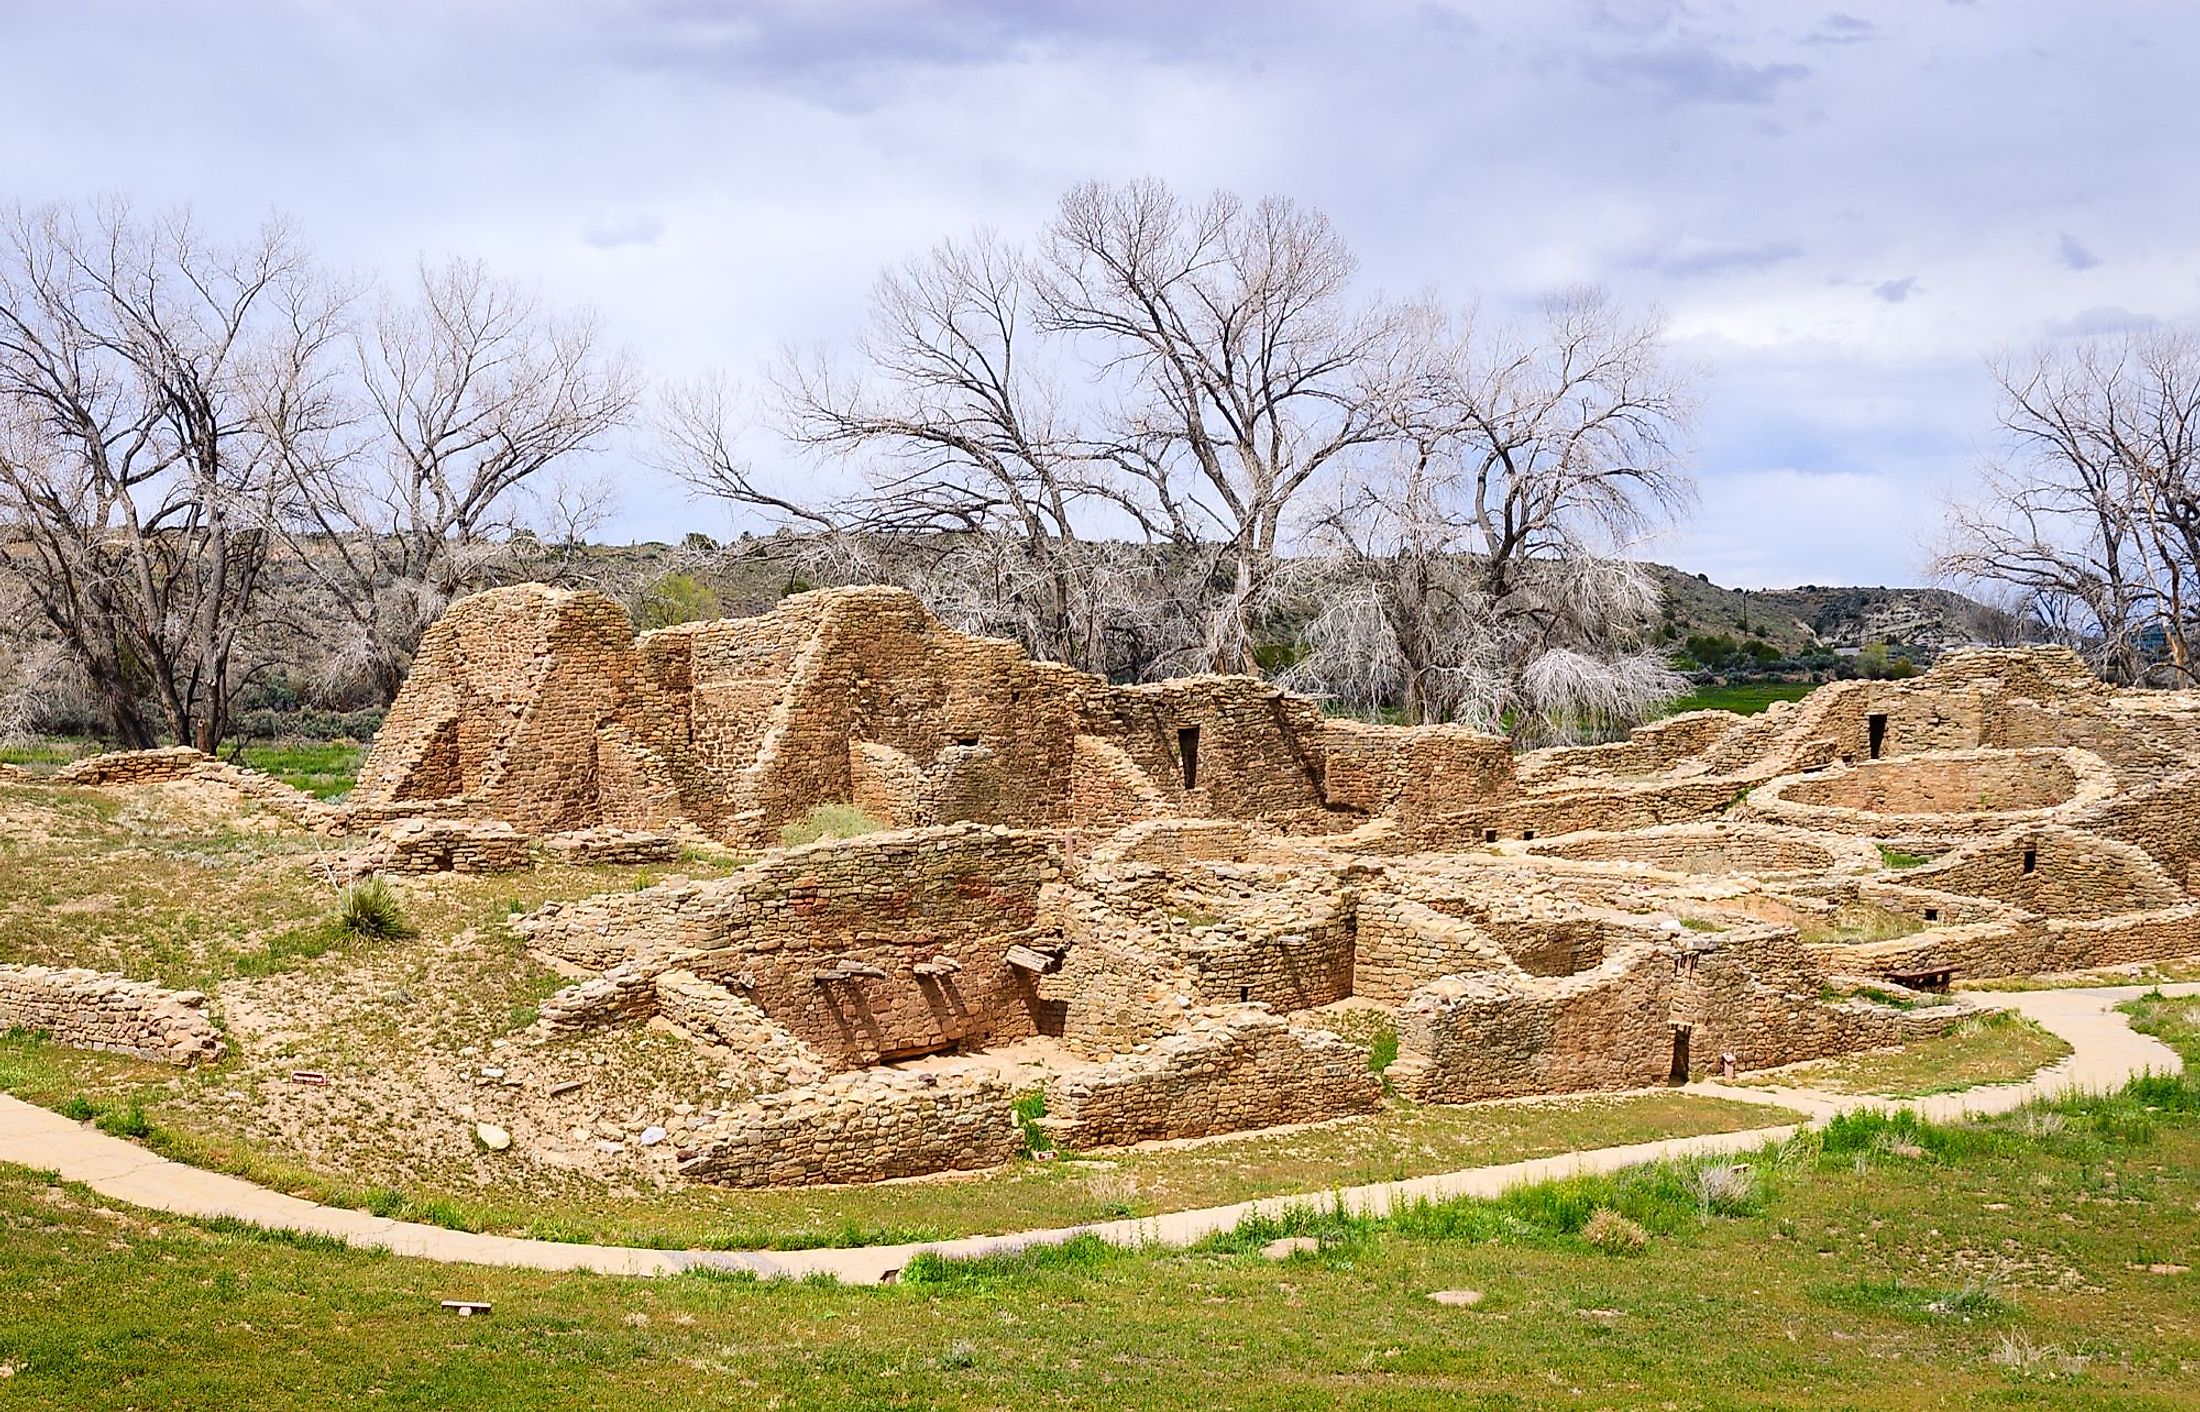 Aztec Ruins National Monument, Aztec, New Mexico